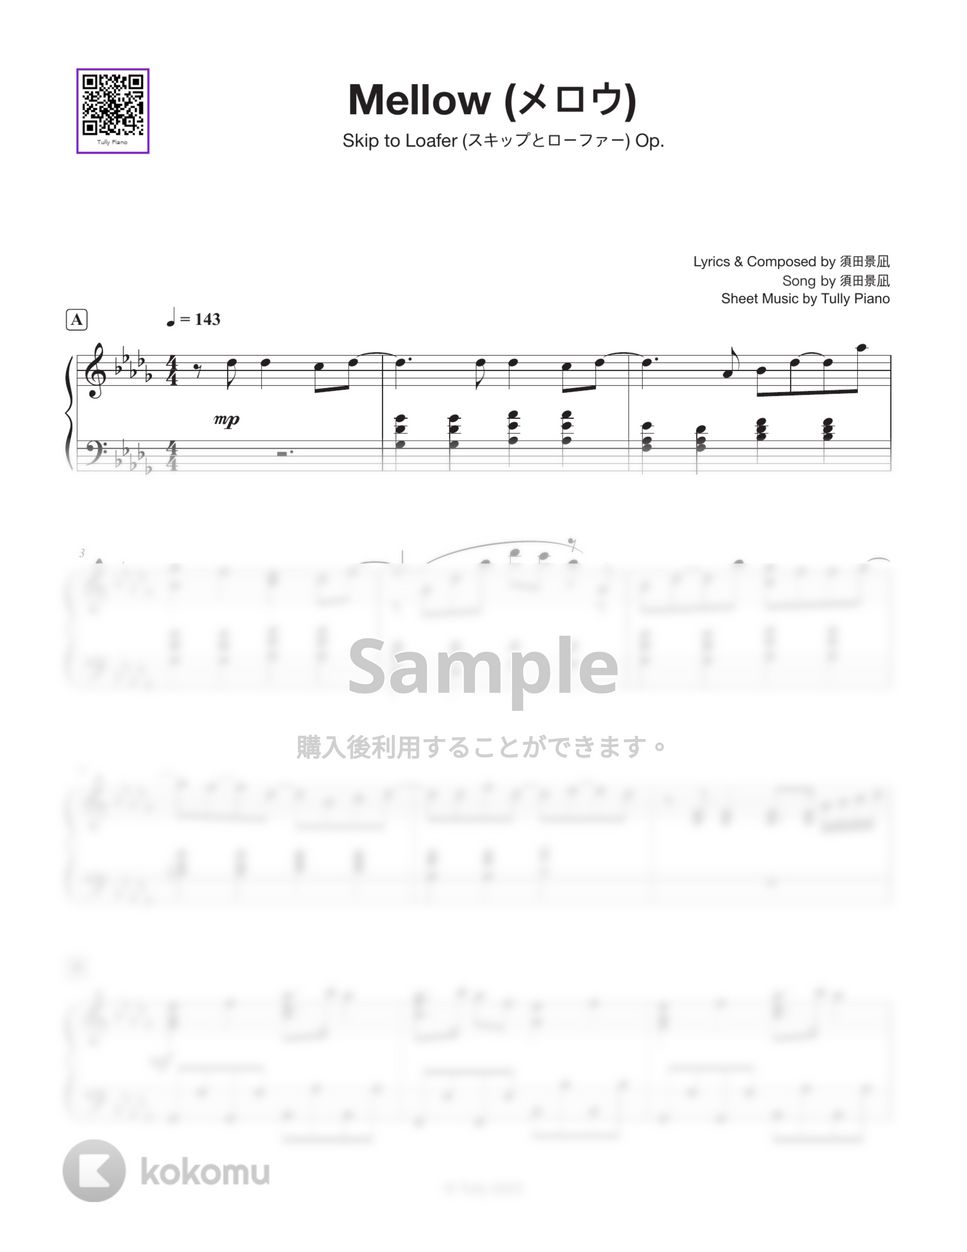 Keina Suda - Mellow (メロウ) (組成変更付き) by Tully Piano